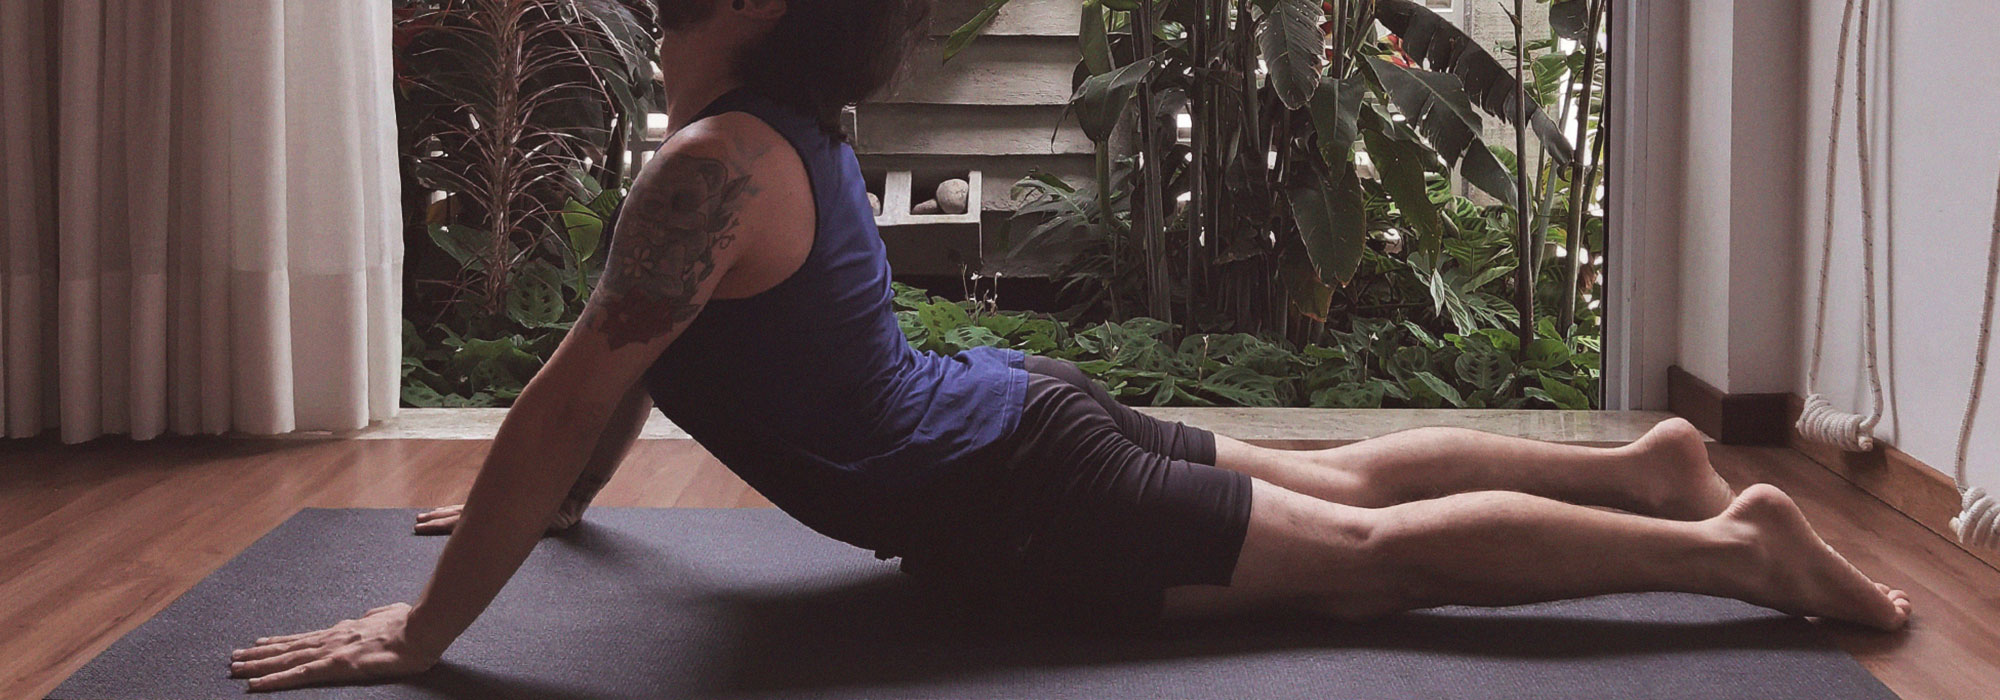 Posições de Yoga - Conheça a fundo o estilo Hatha!